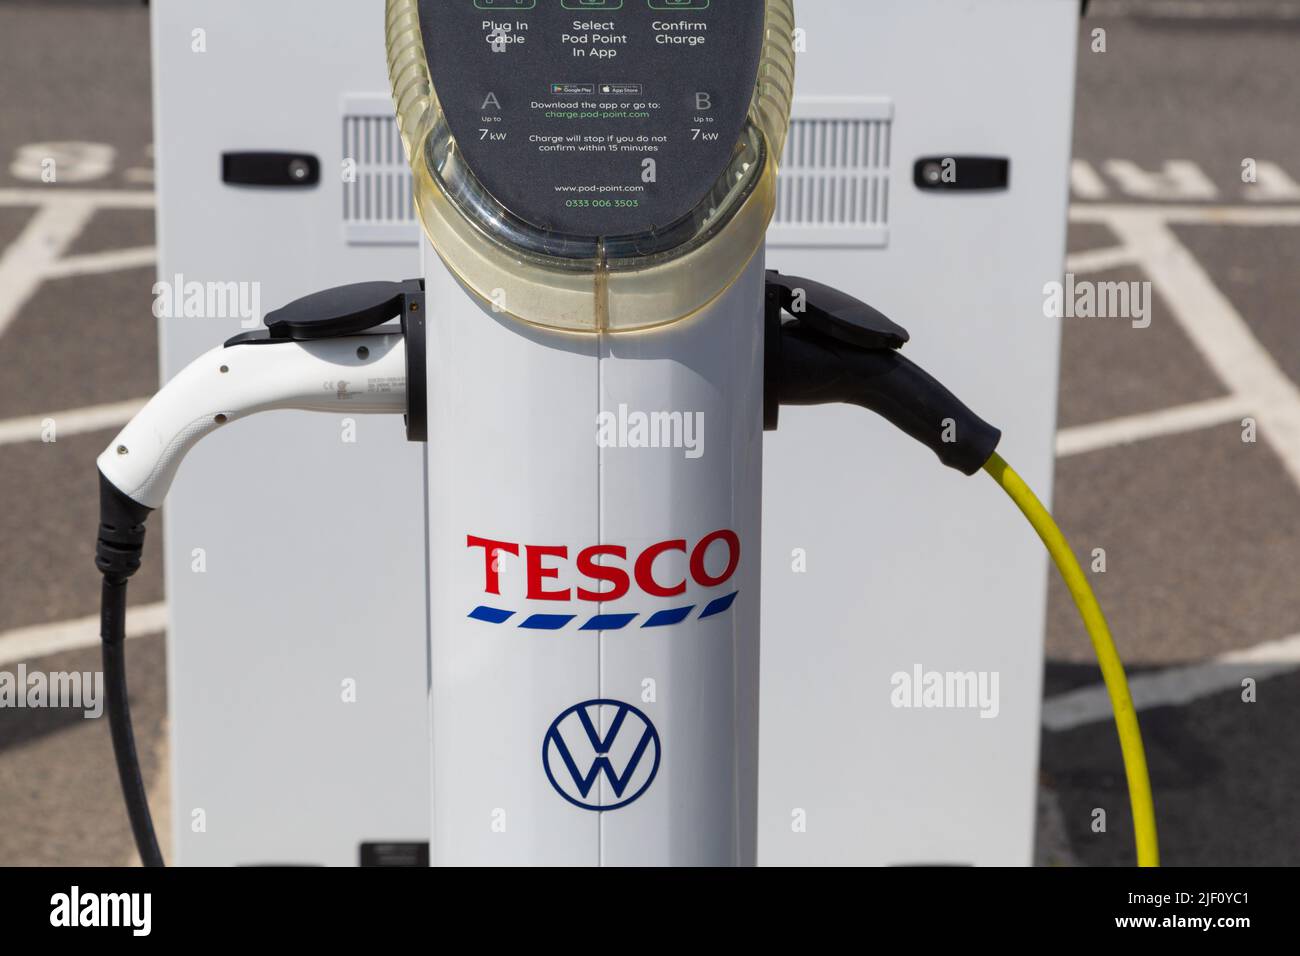 Tesco electric vehicle car pod point, tenterden, kent, uk Stock Photo